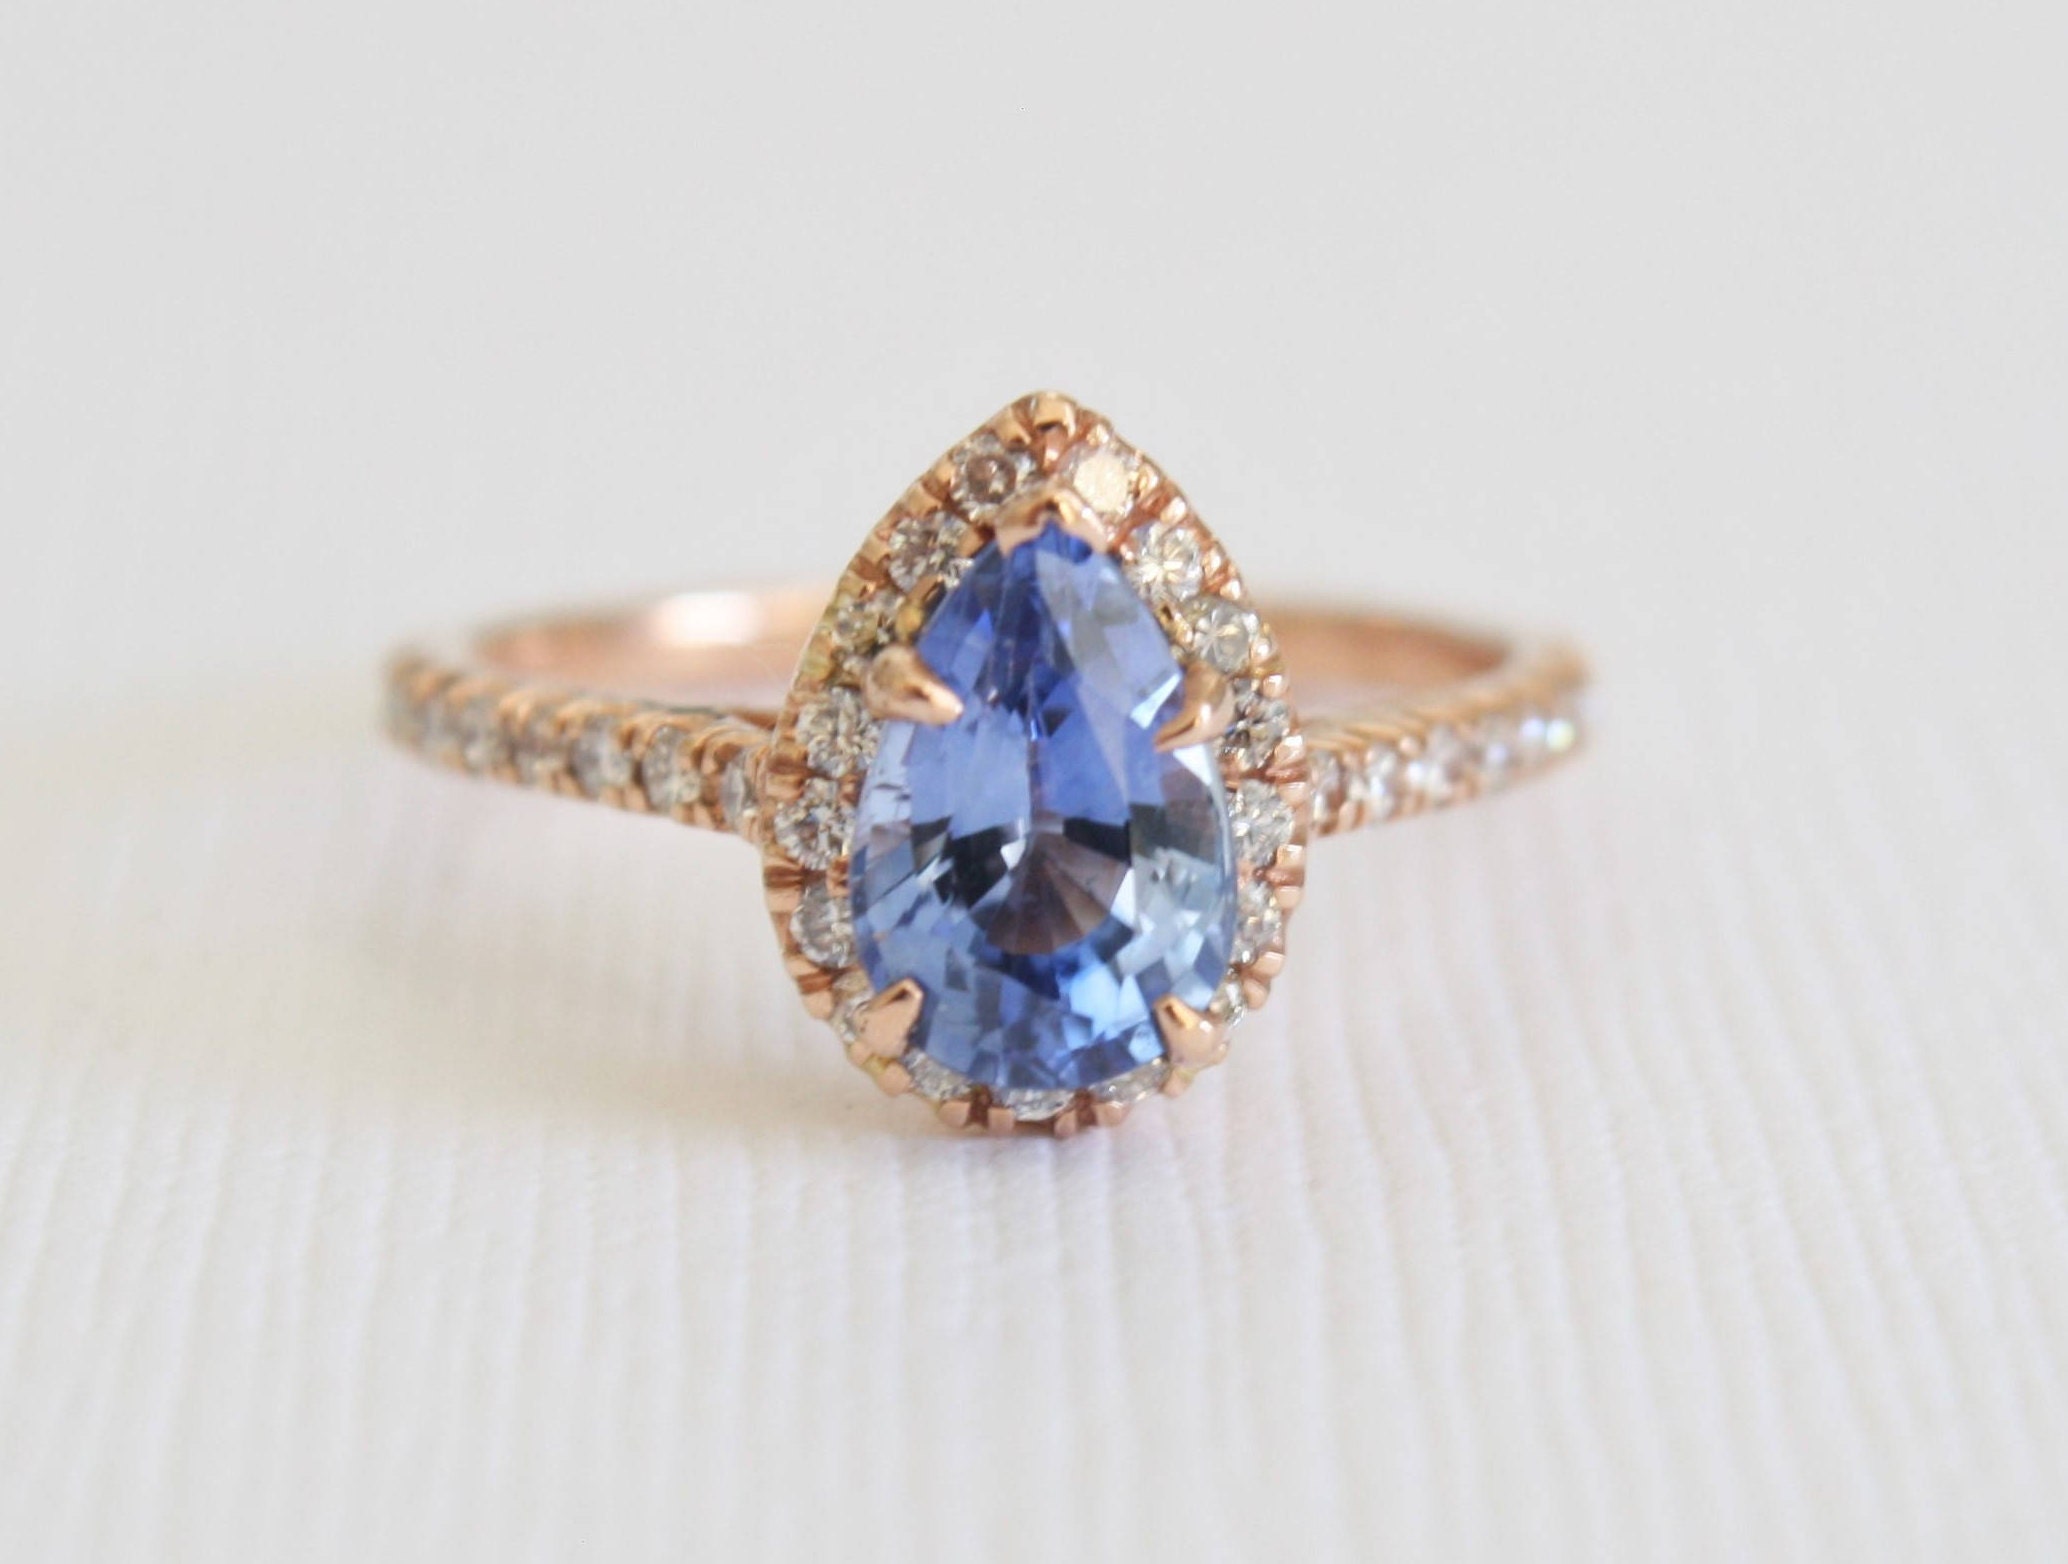 Pear Cut Periwinkle Blue Sapphire Diamond Halo Ring in 14K